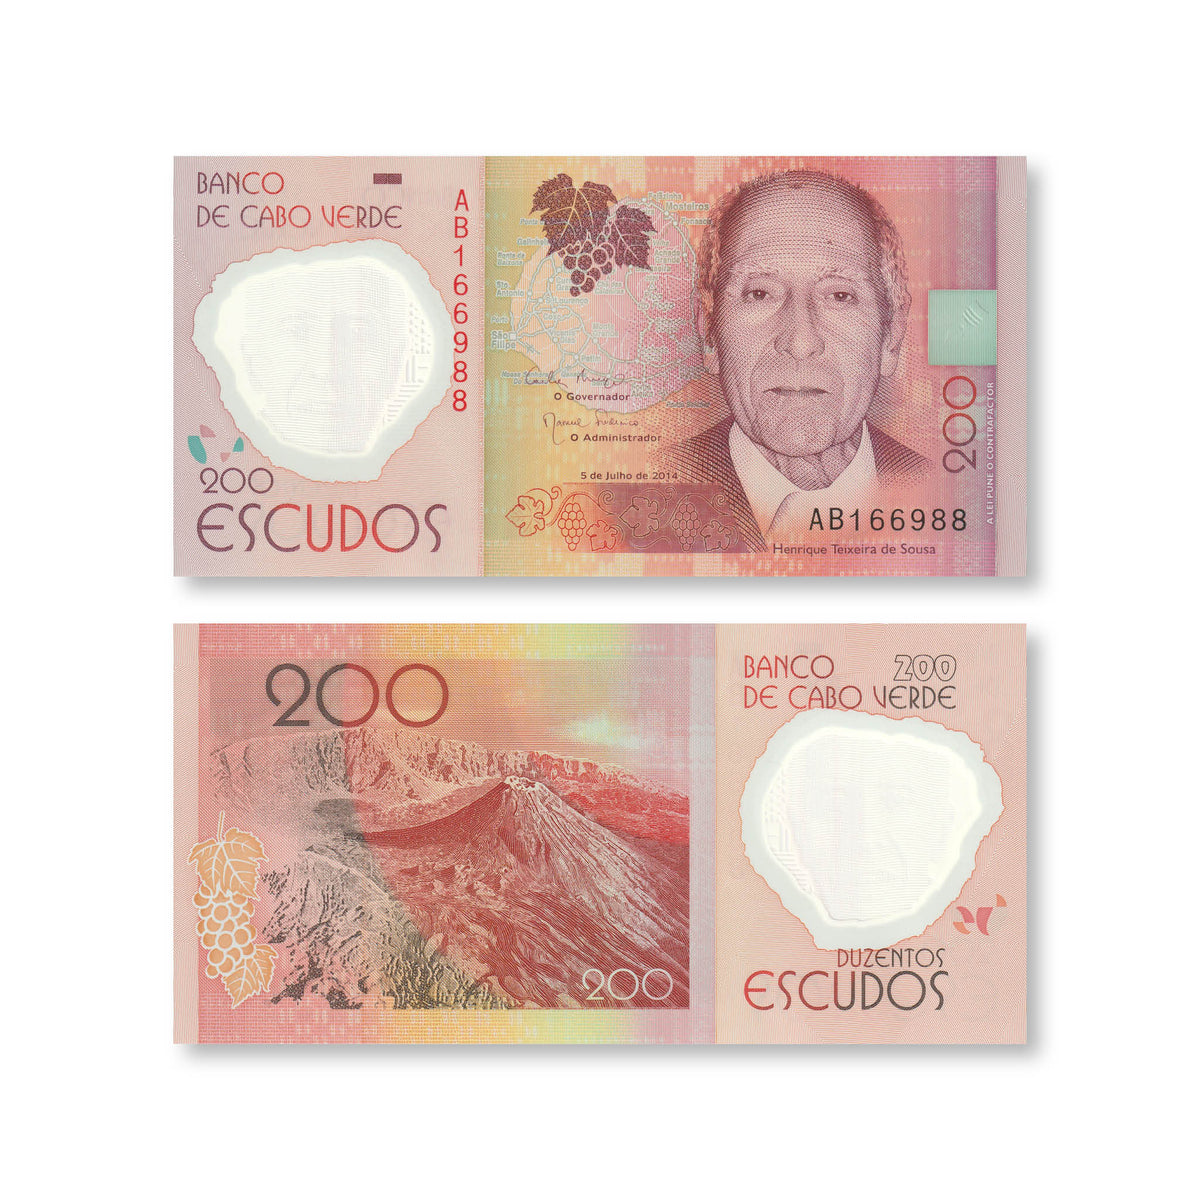 Cape Verde 200 Escudos, 2014, B217a, P71, UNC - Robert's World Money - World Banknotes